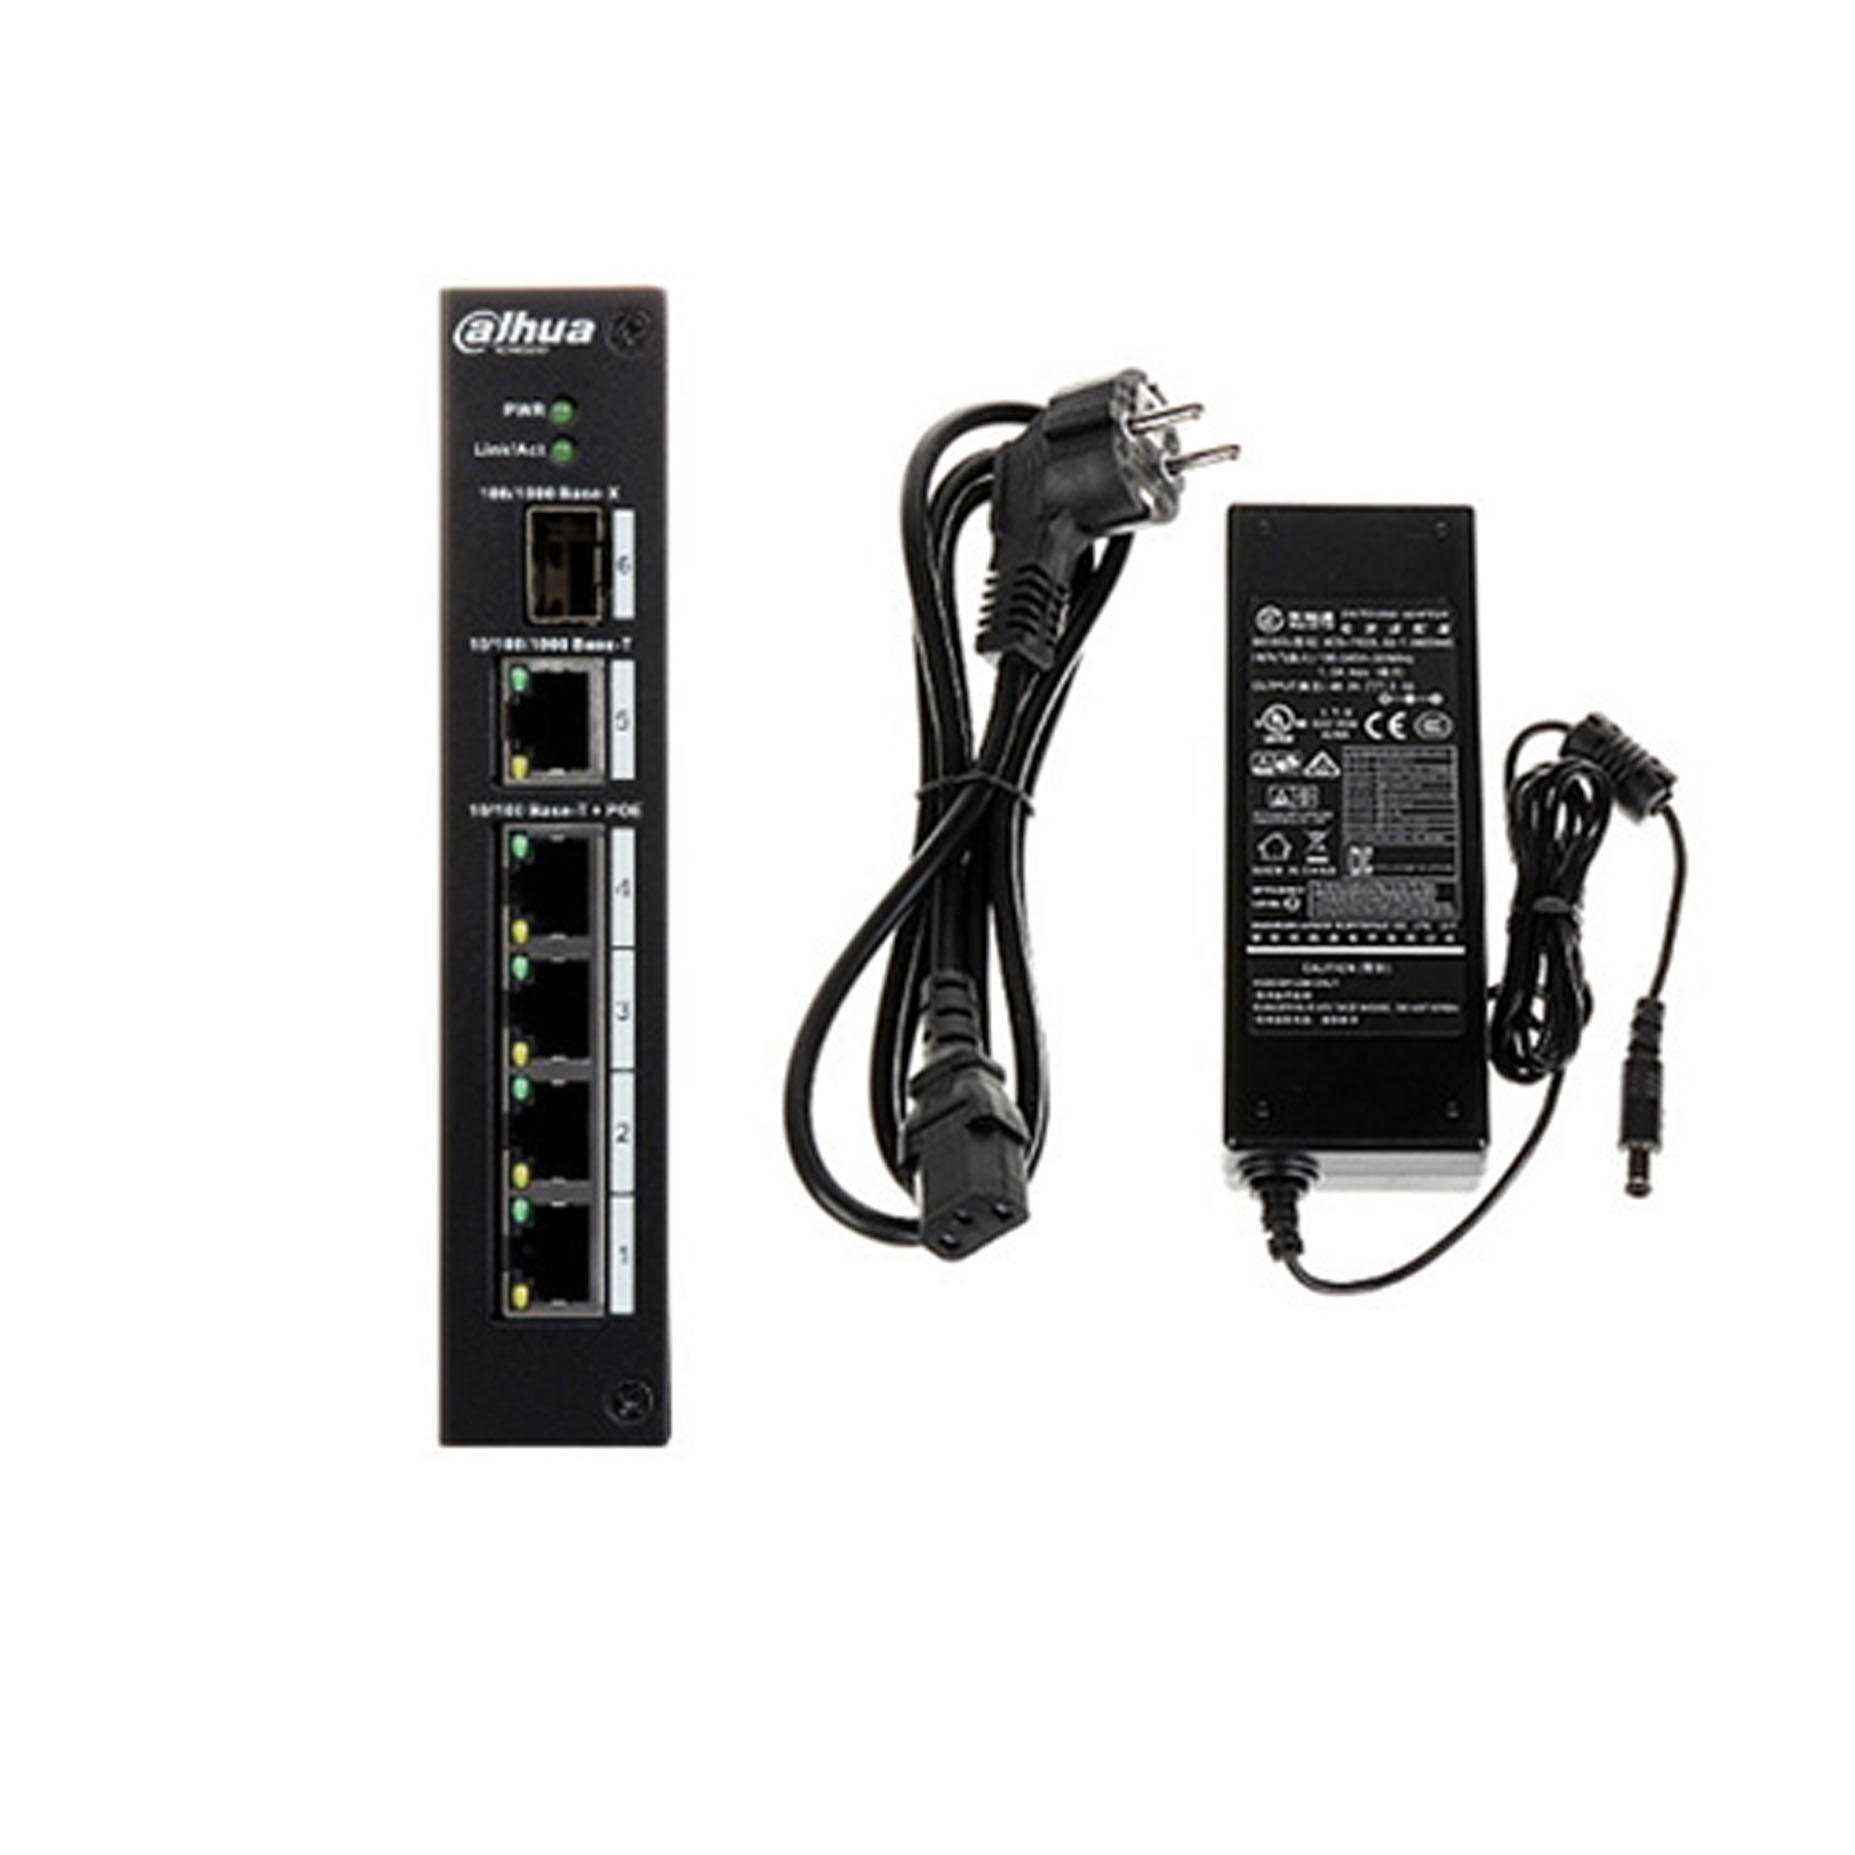 Harga Jual Dahua PFL2106-4ET-96 4-Port ePoE Switch